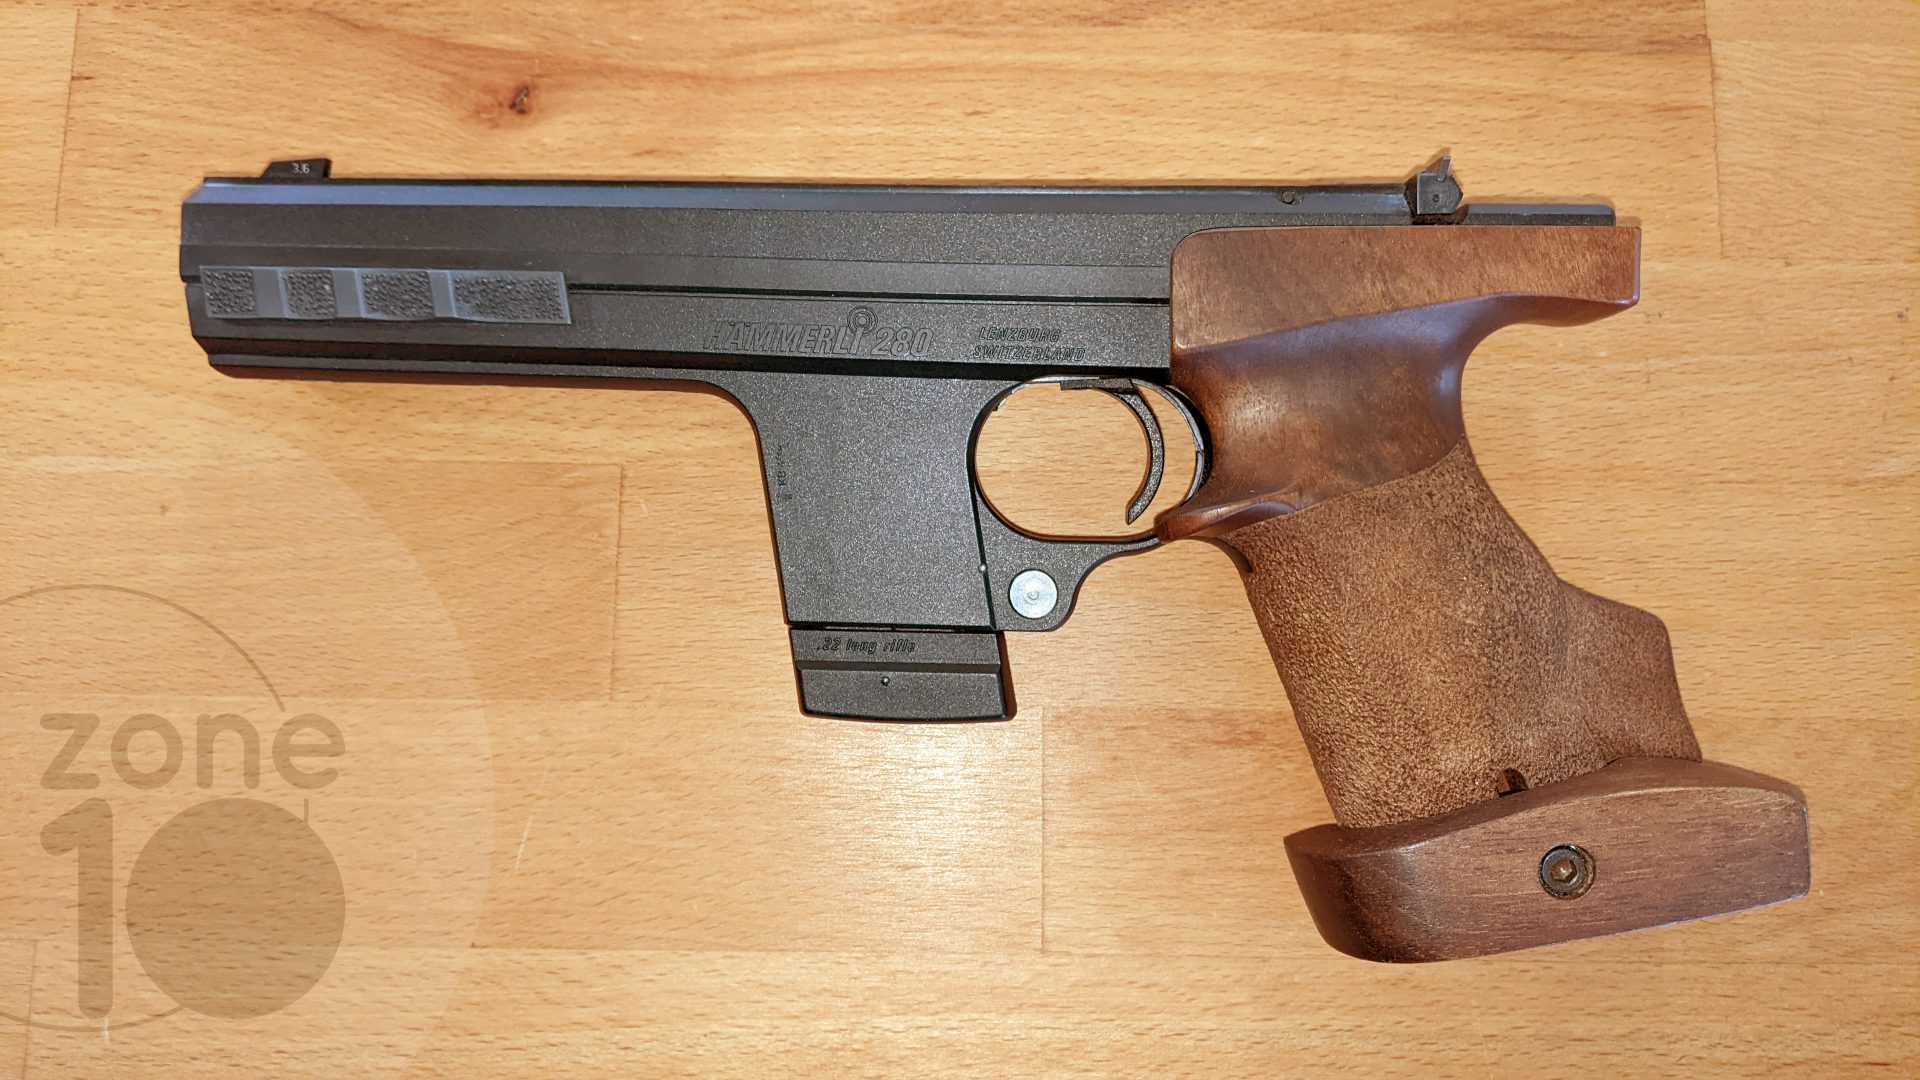 Pistolet Hammerli 280, imprimé en 3D. -  France